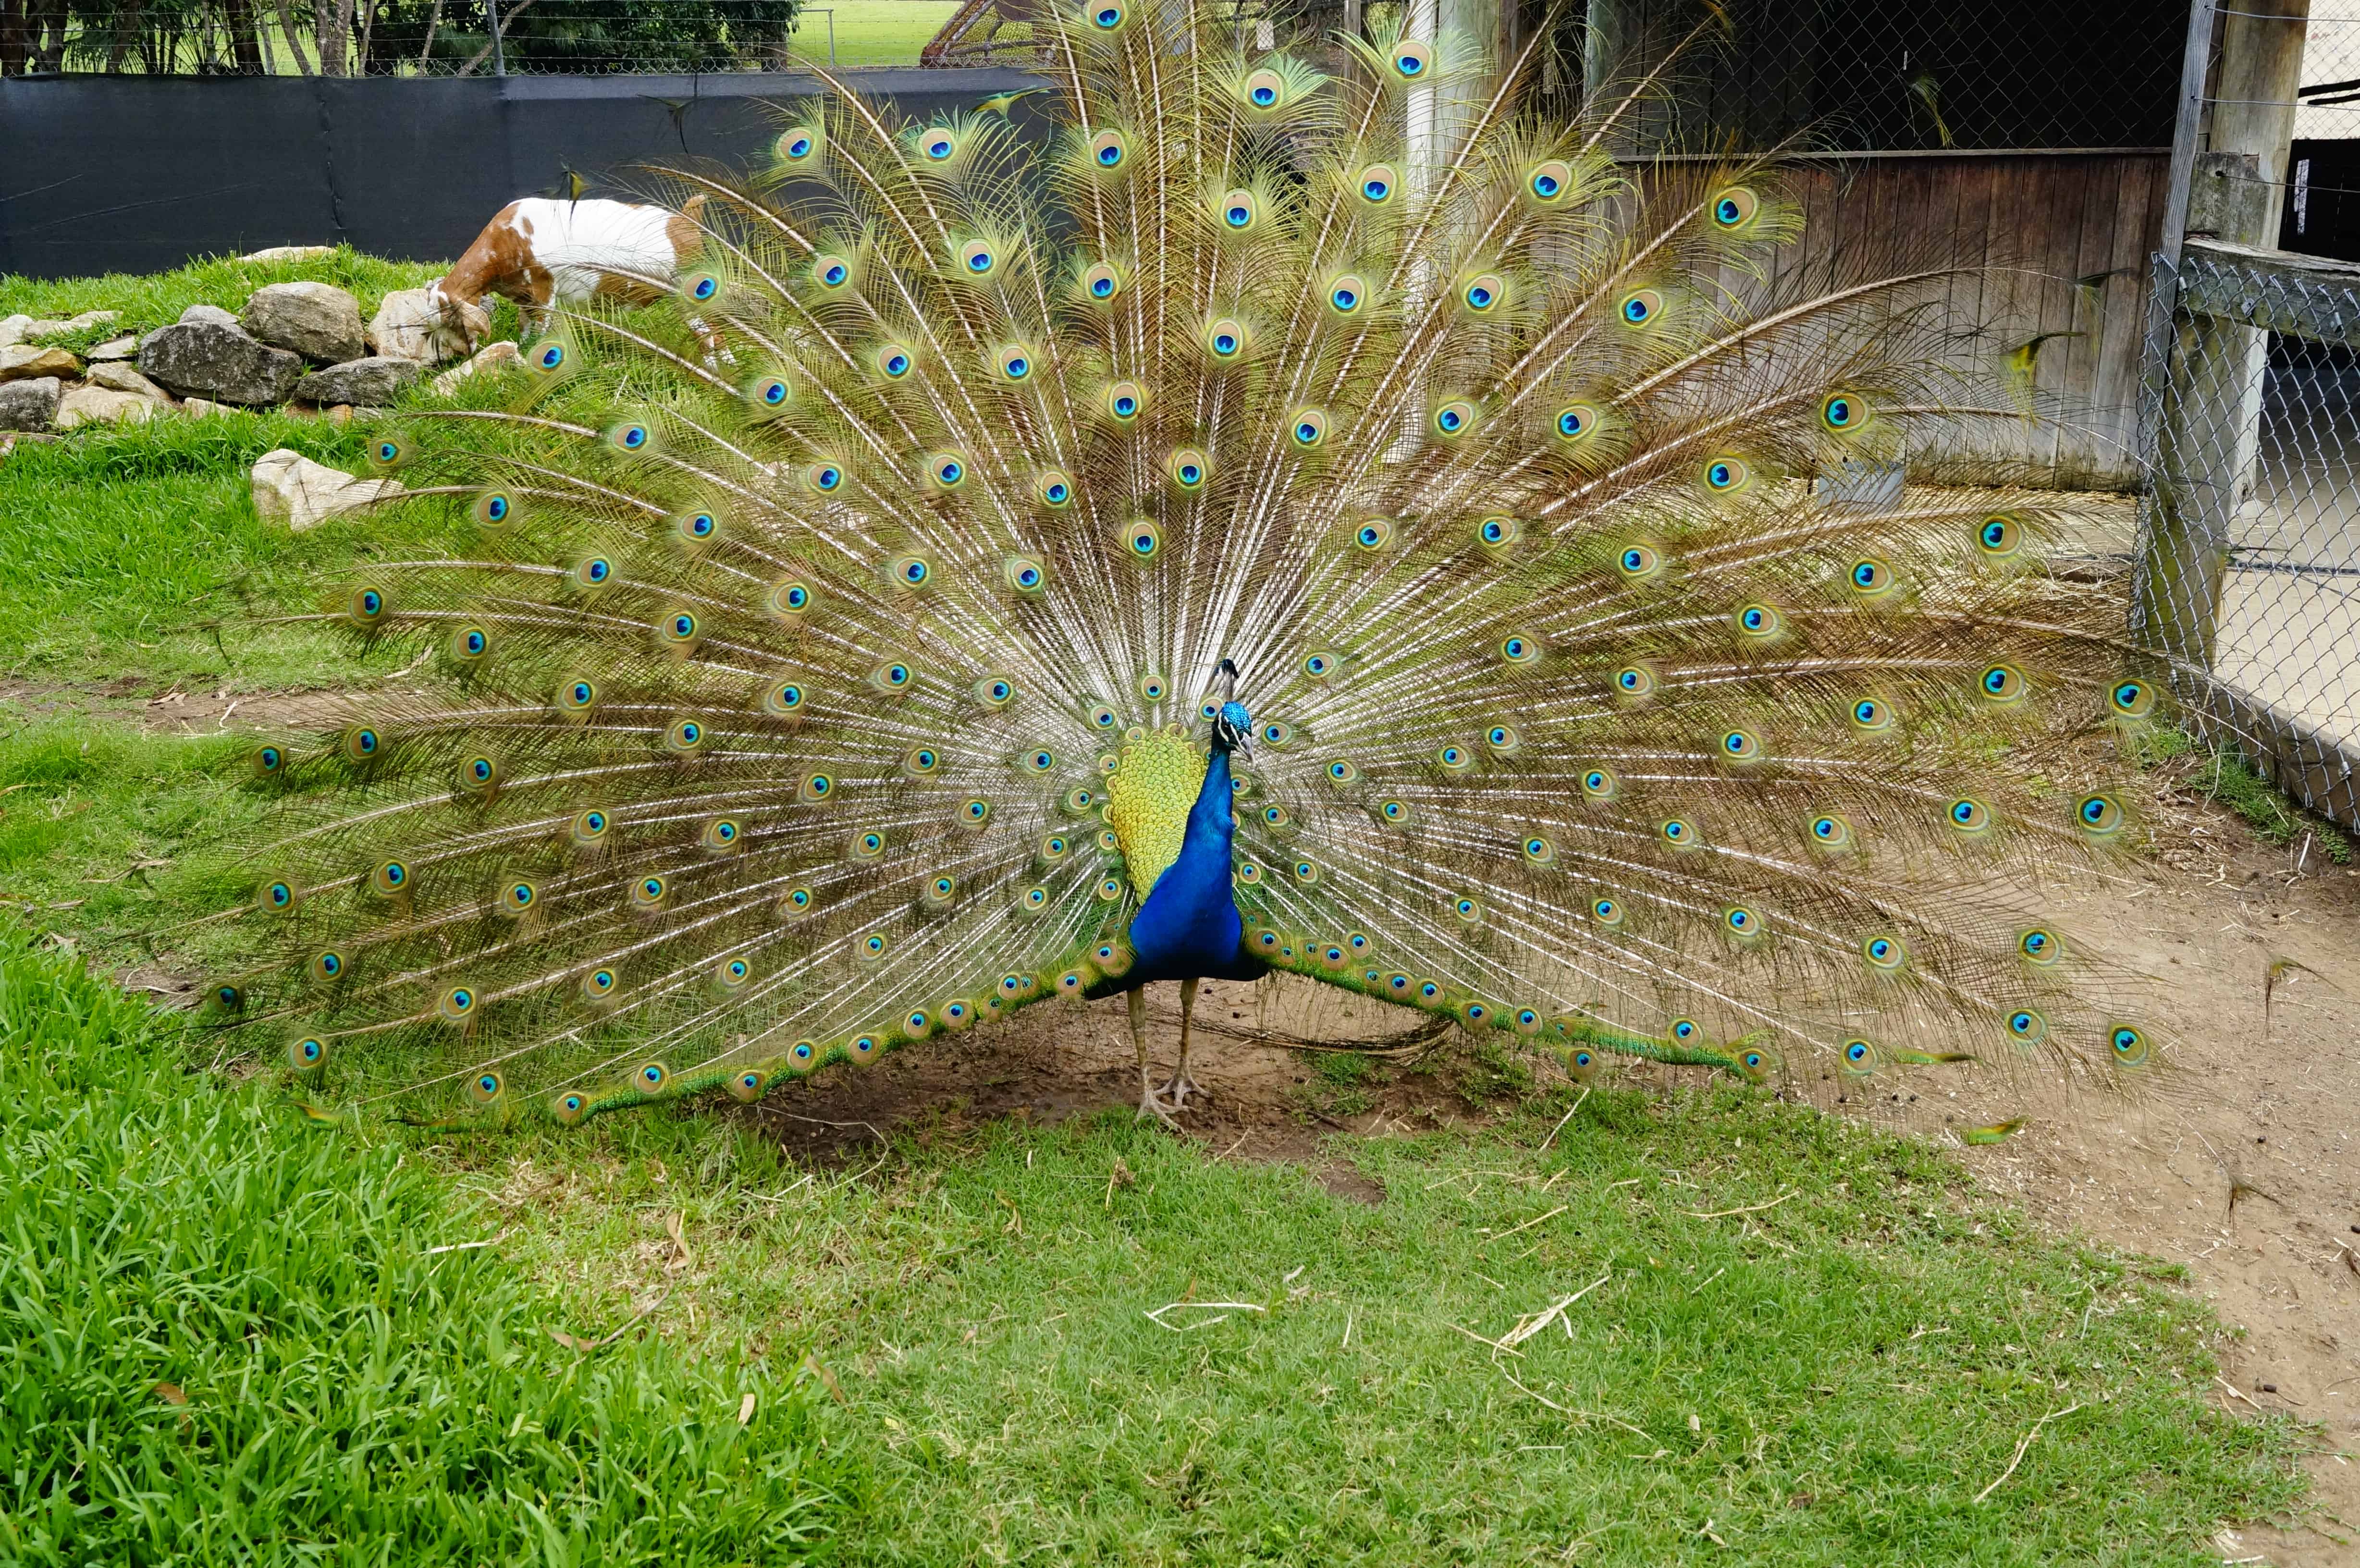 Ipswich Nature Centre peacock